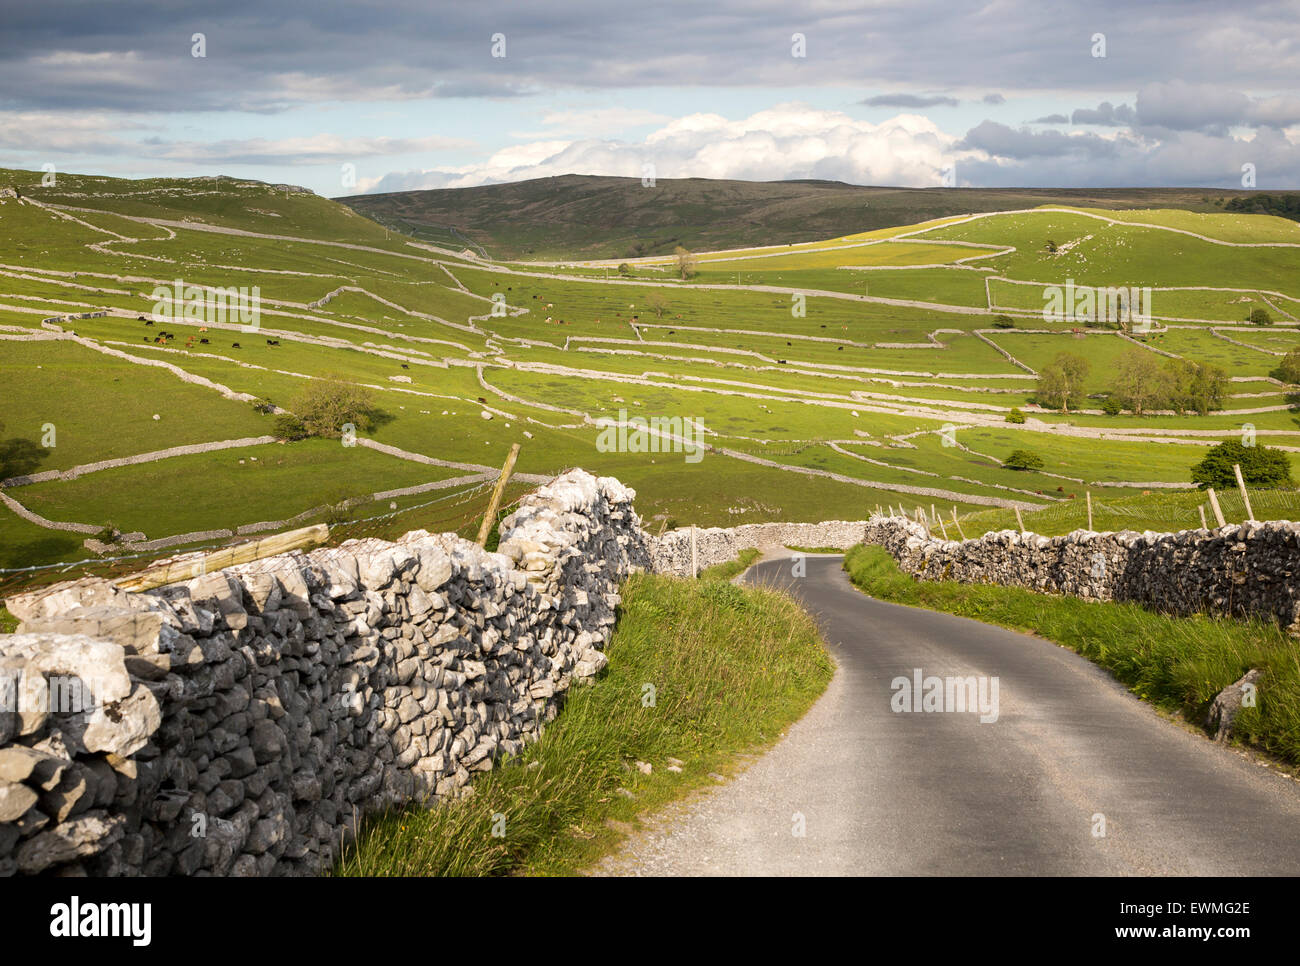 Country lane and dry stonewalls, Malham, Yorkshire Dales national park, England, UK Stock Photo